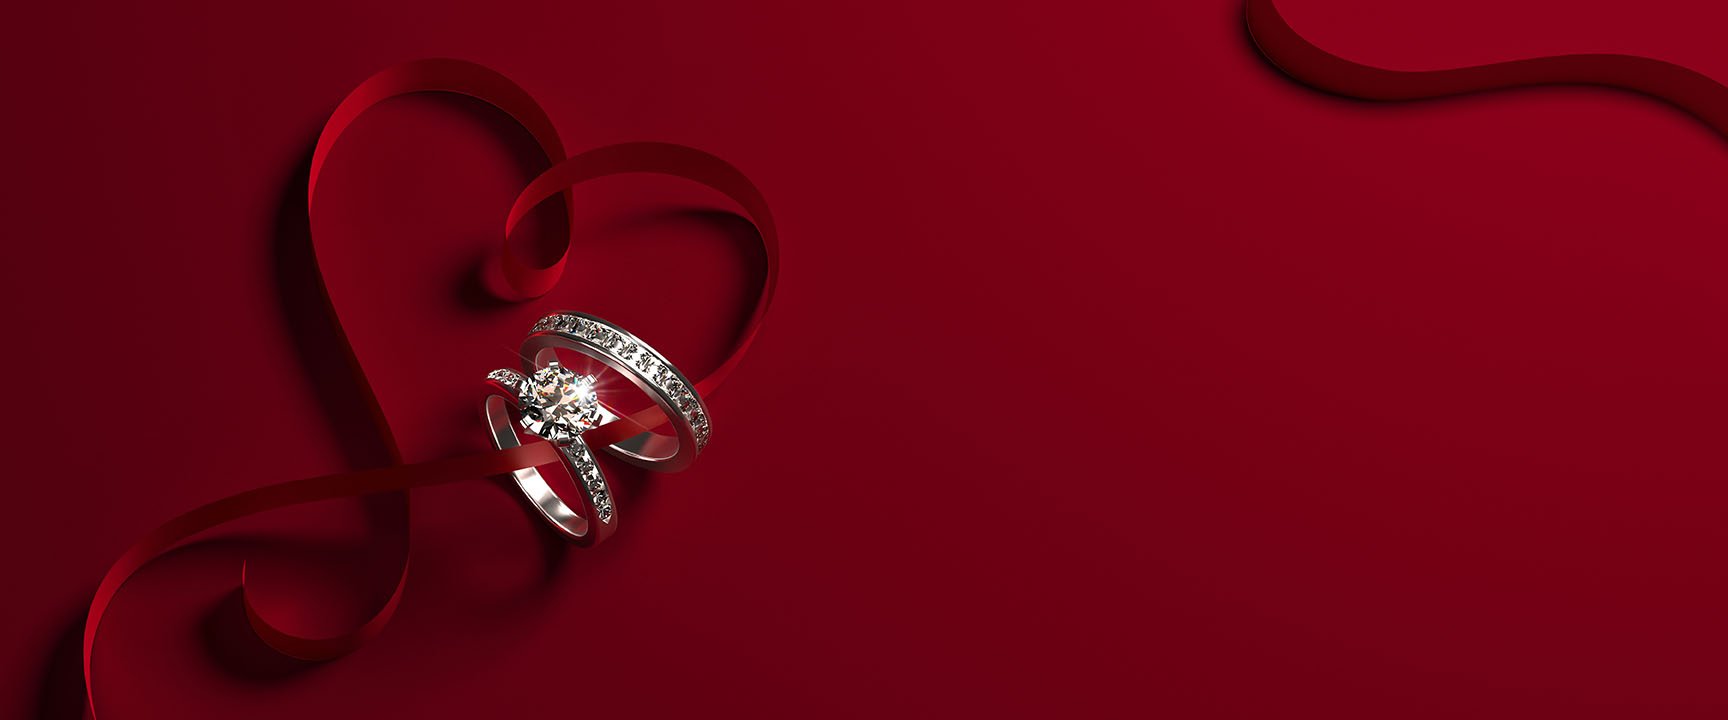 engagement ring insurance